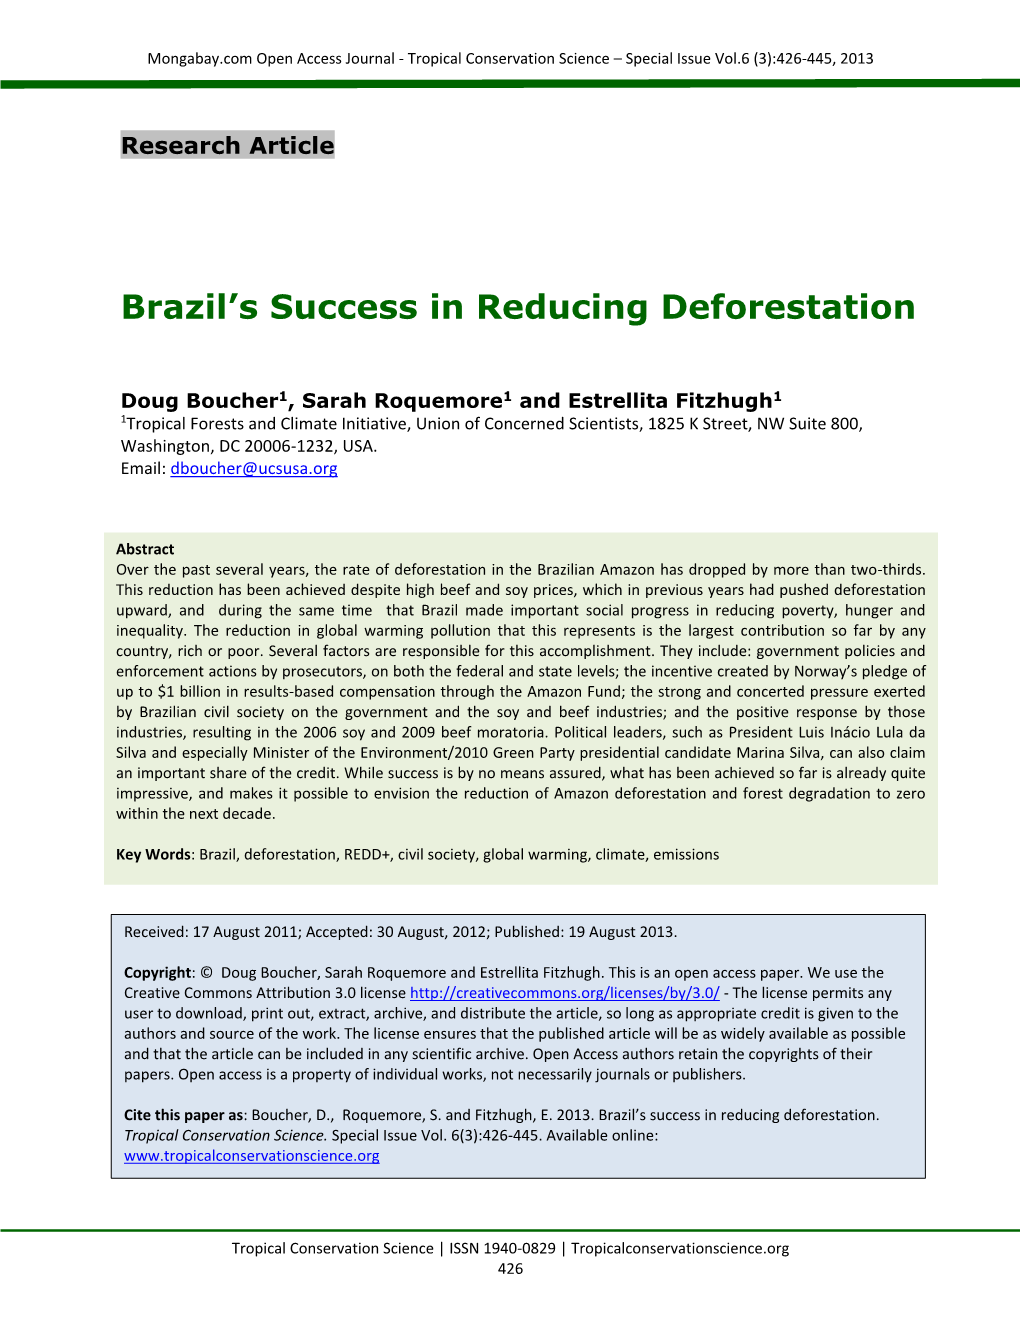 Brazil's Success in Reducing Deforestation